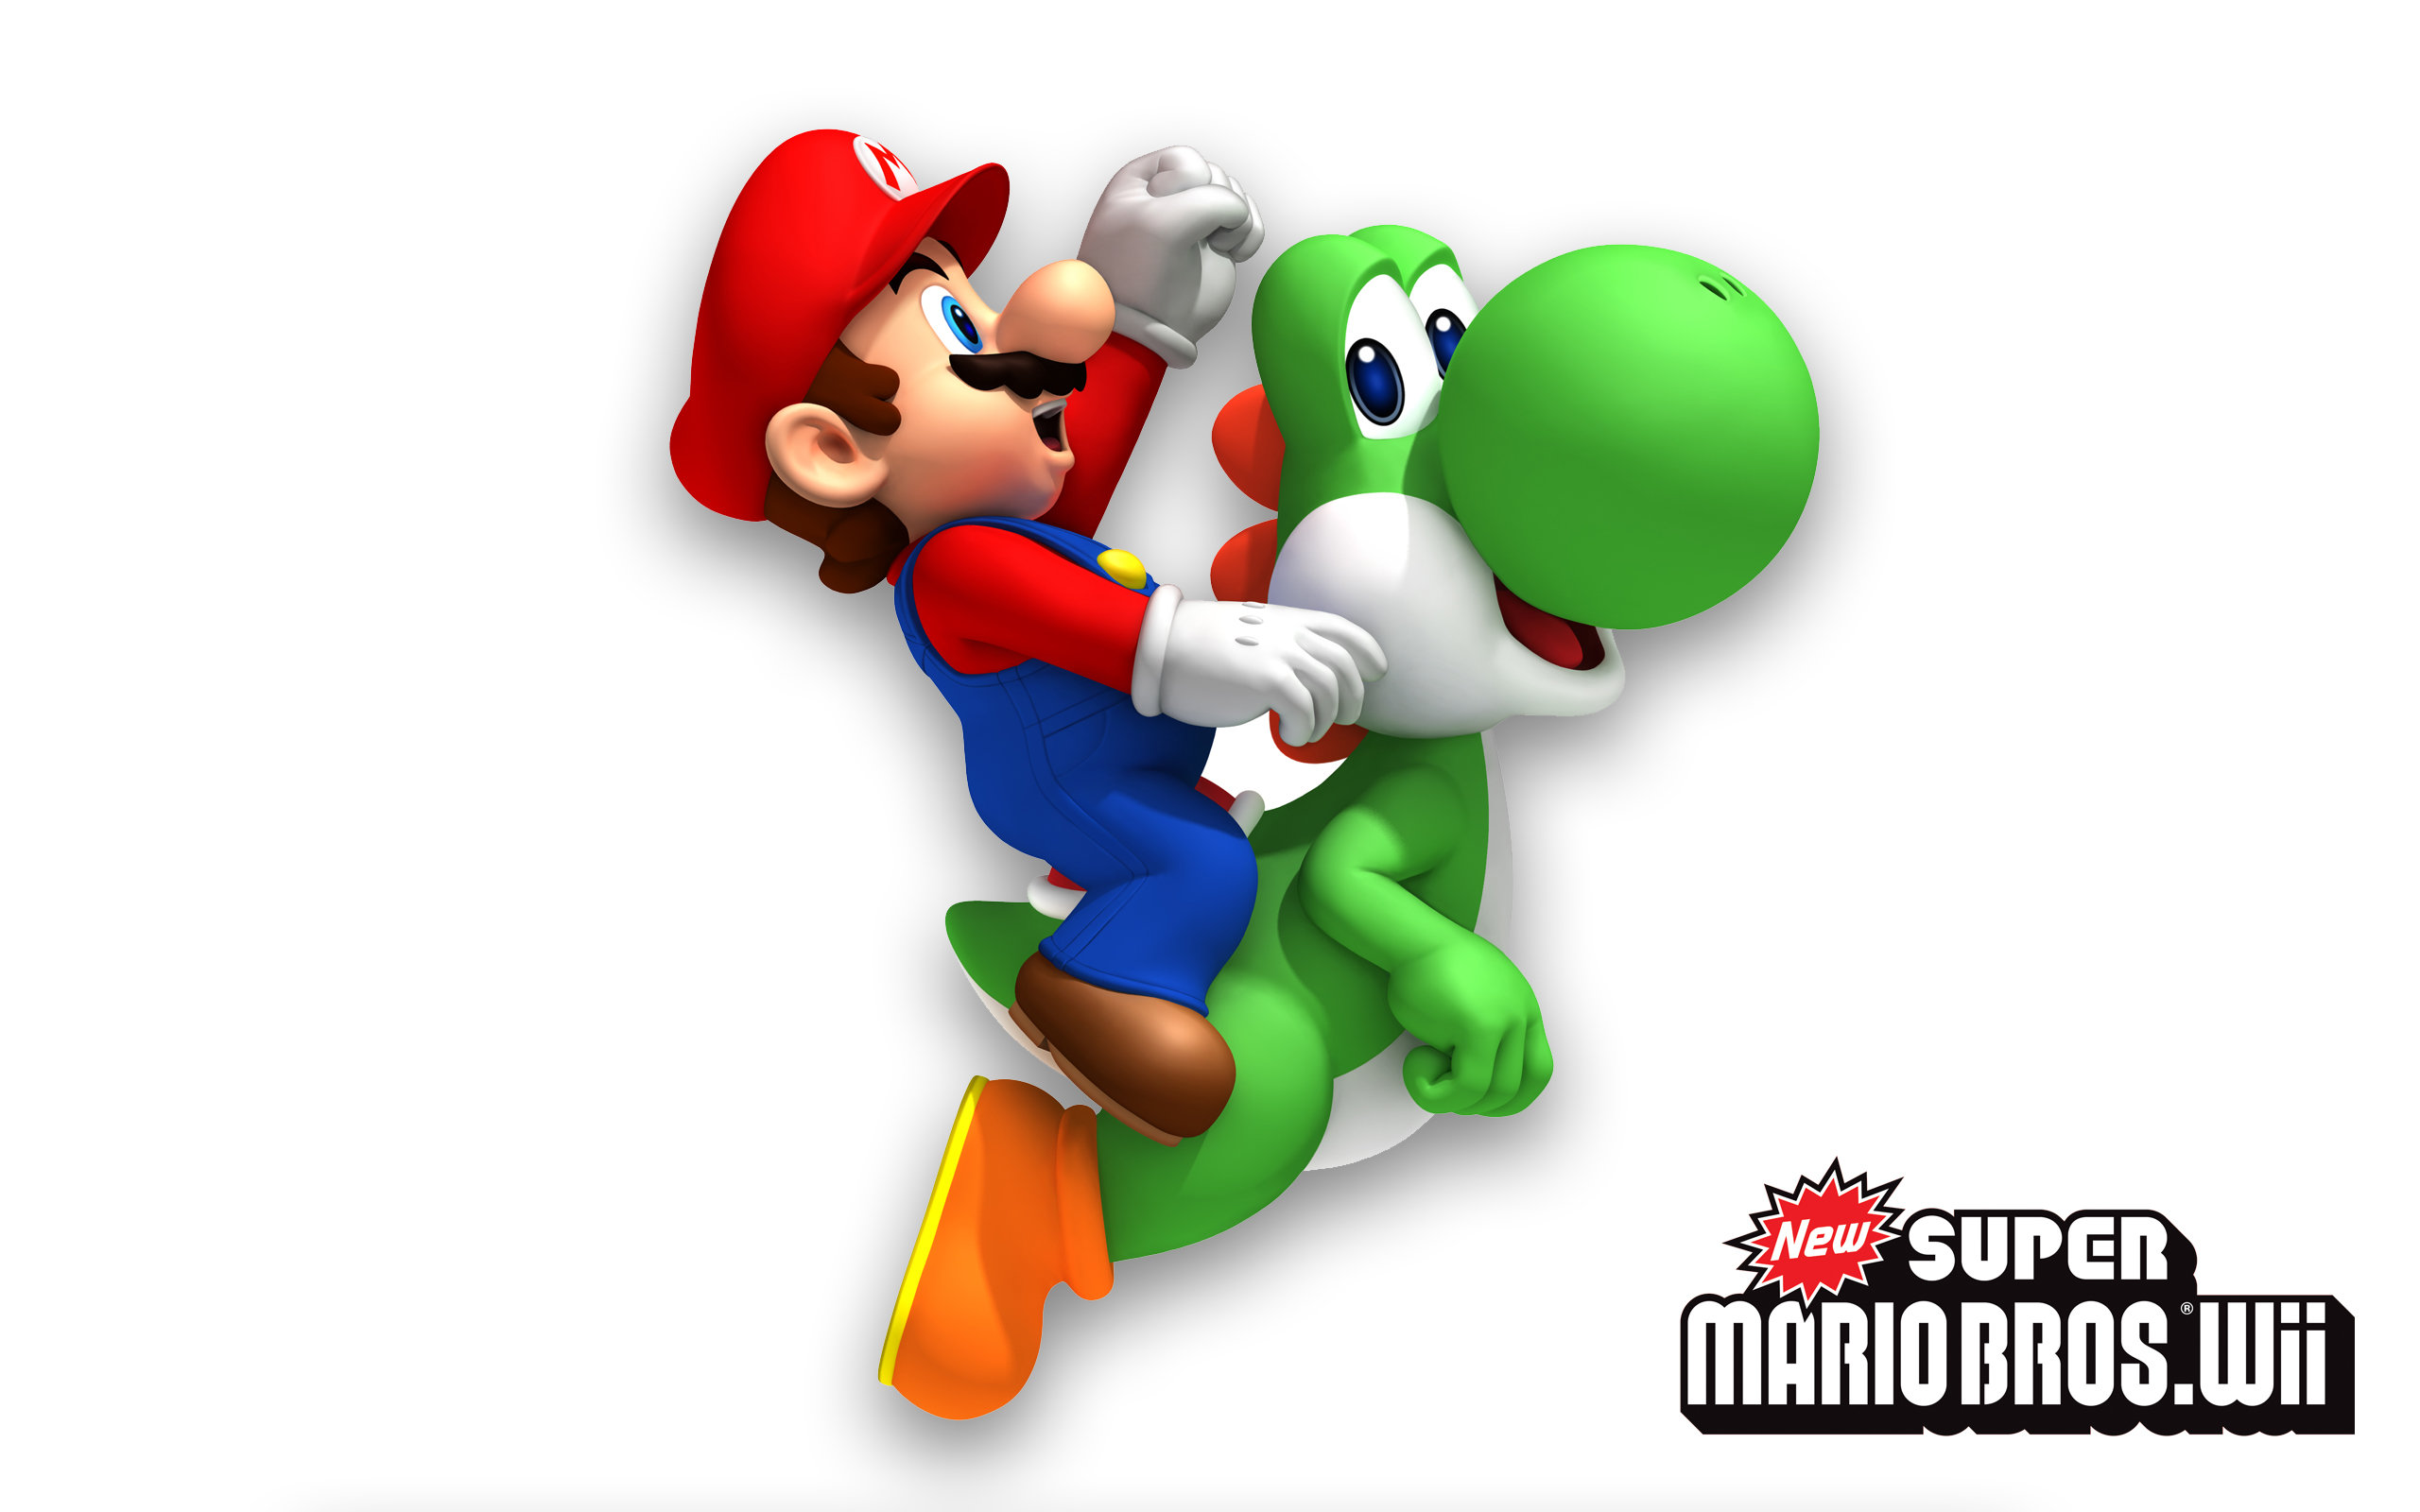 New Super Mario Bros. Wii wallpaper HD for desktop background